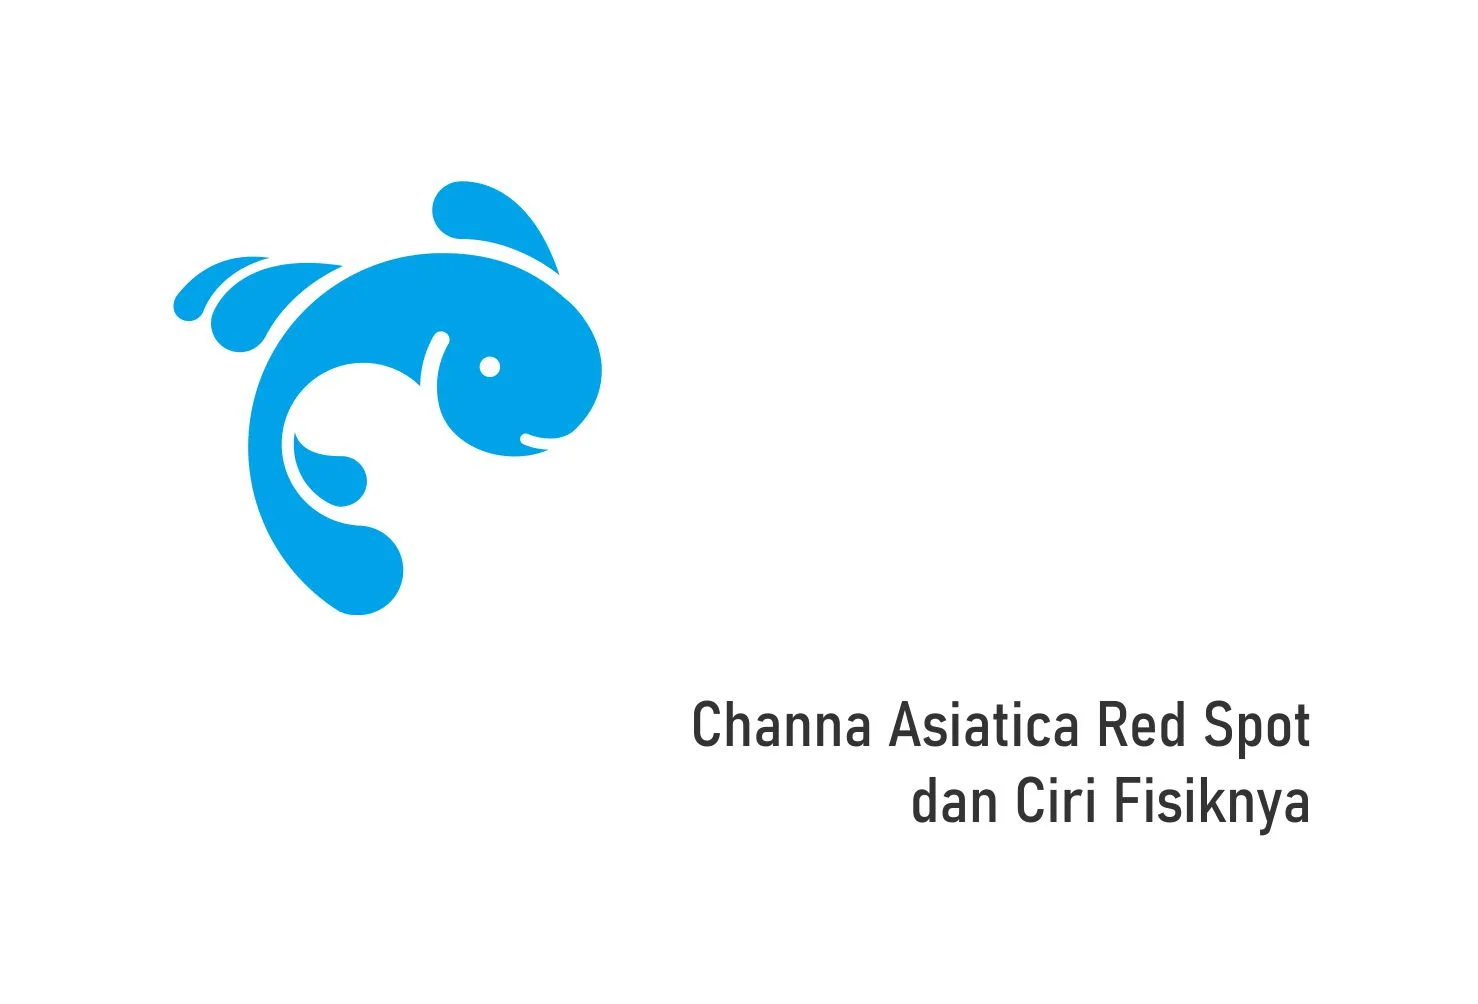 Channa Asiatica Red Spot